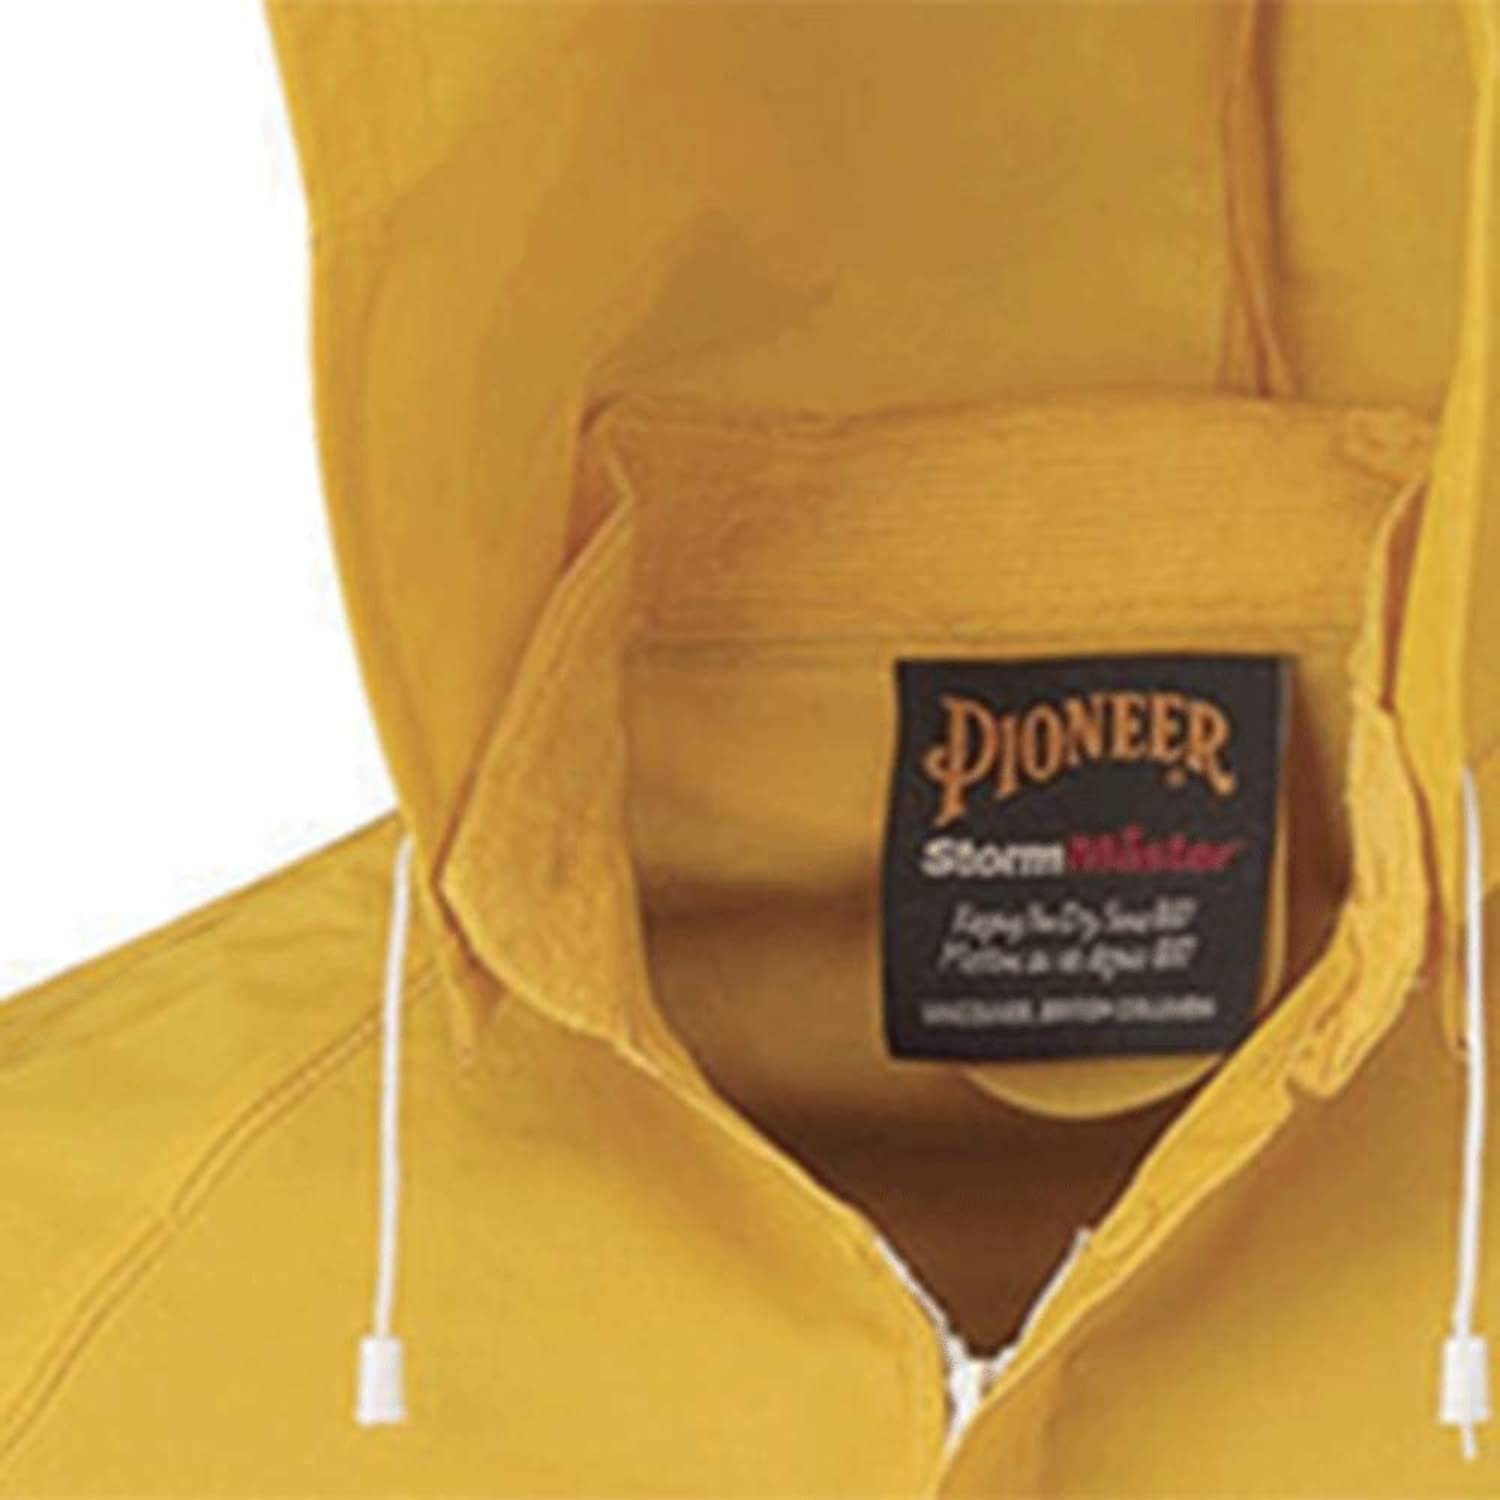 Pioneer Repel Rain Gear Safety Jacket & Bib Pants -Waterproof & Windproof PVC Work Suit for Men - 3 PC with Detachable Hood